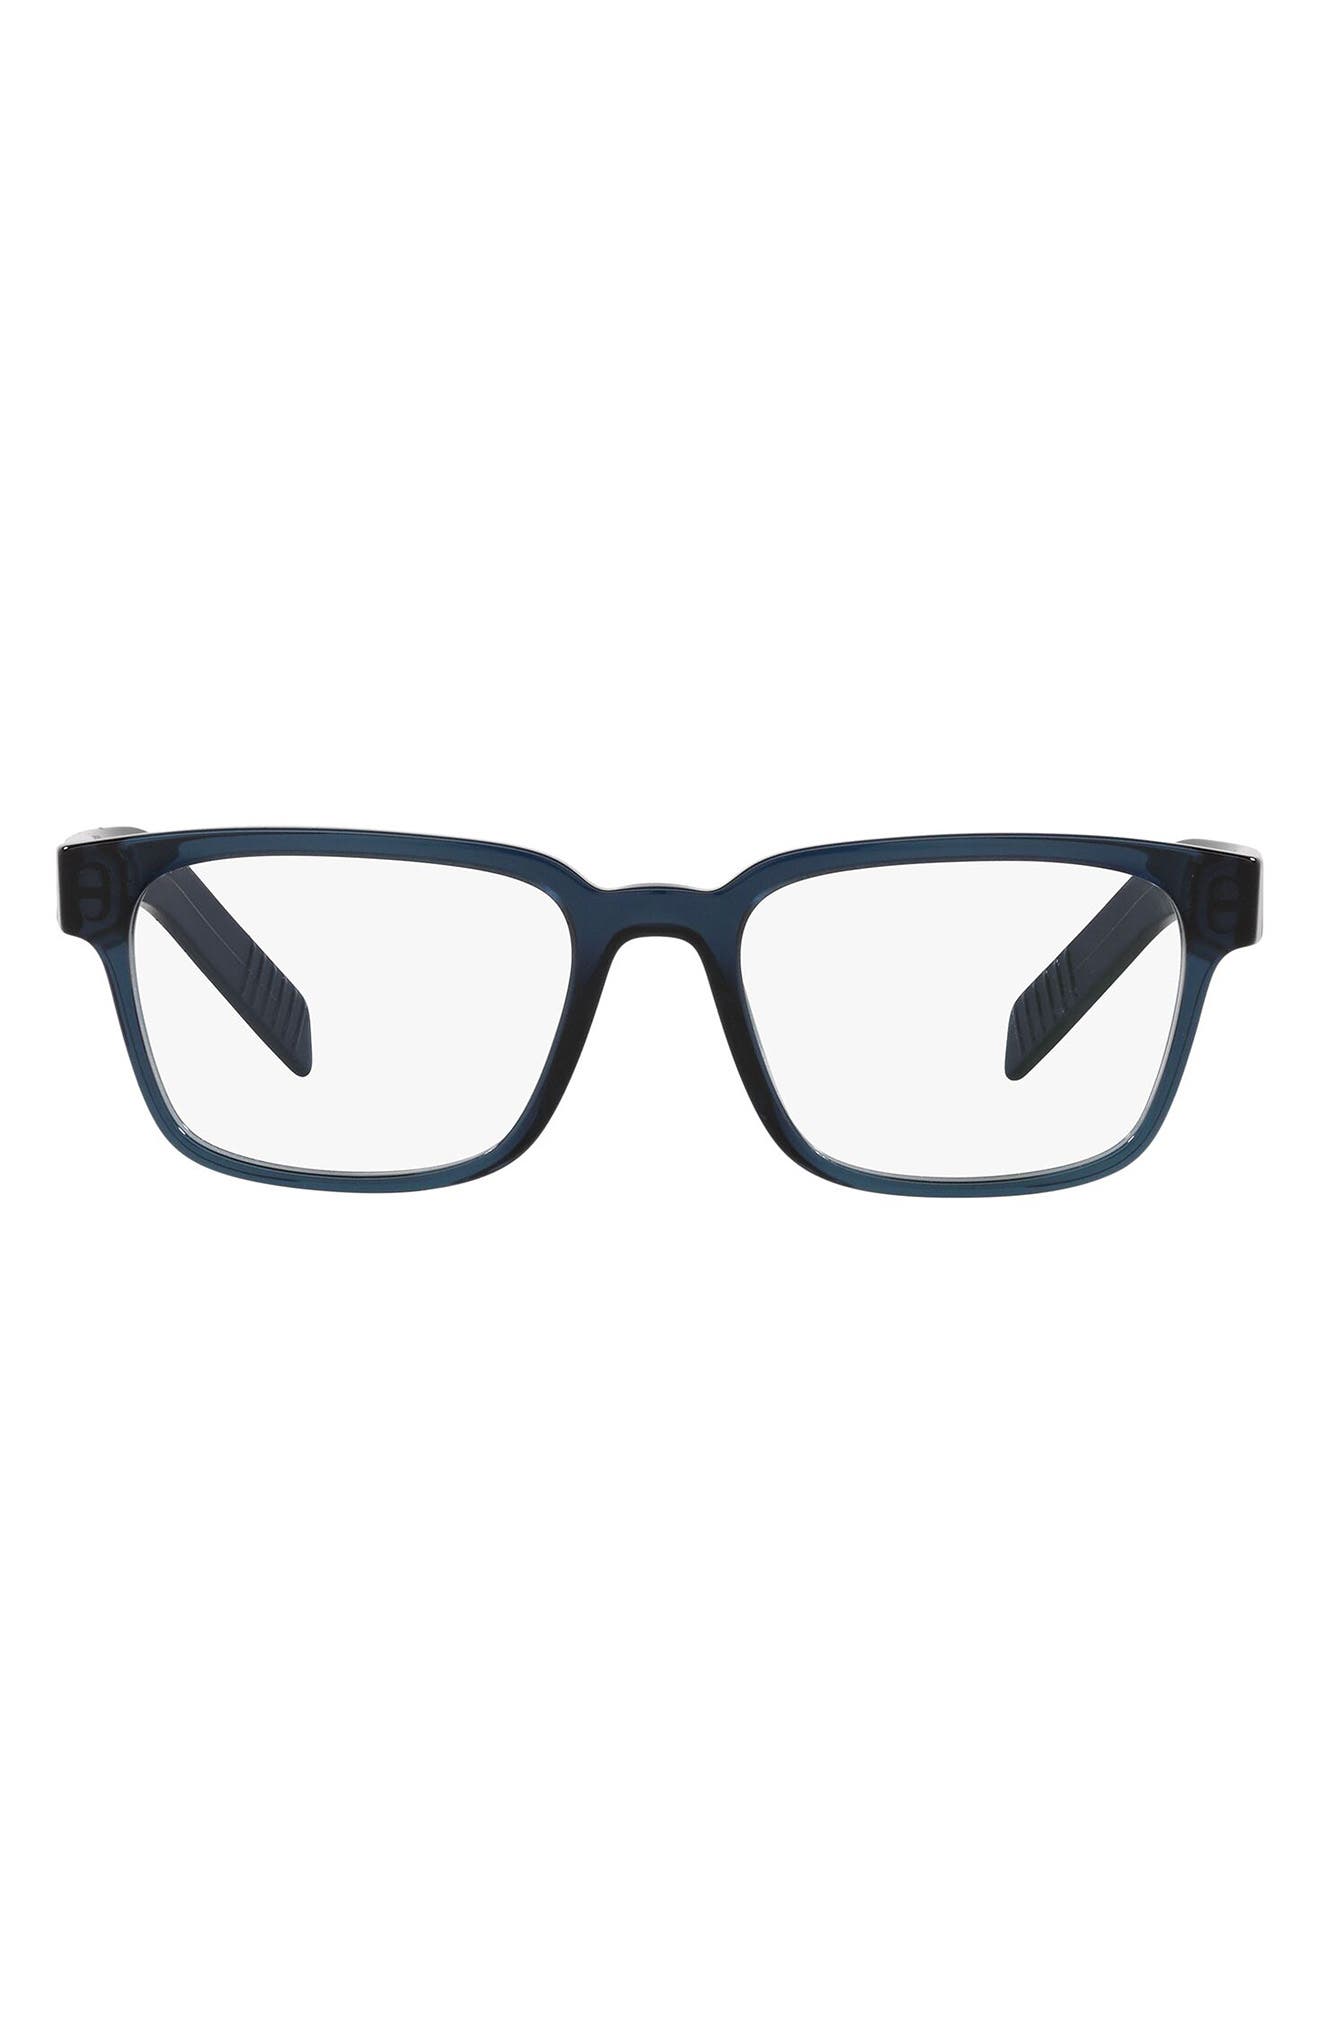 Prada 53mm Optical Glasses in Transparent Blue/demo Lens at Nordstrom